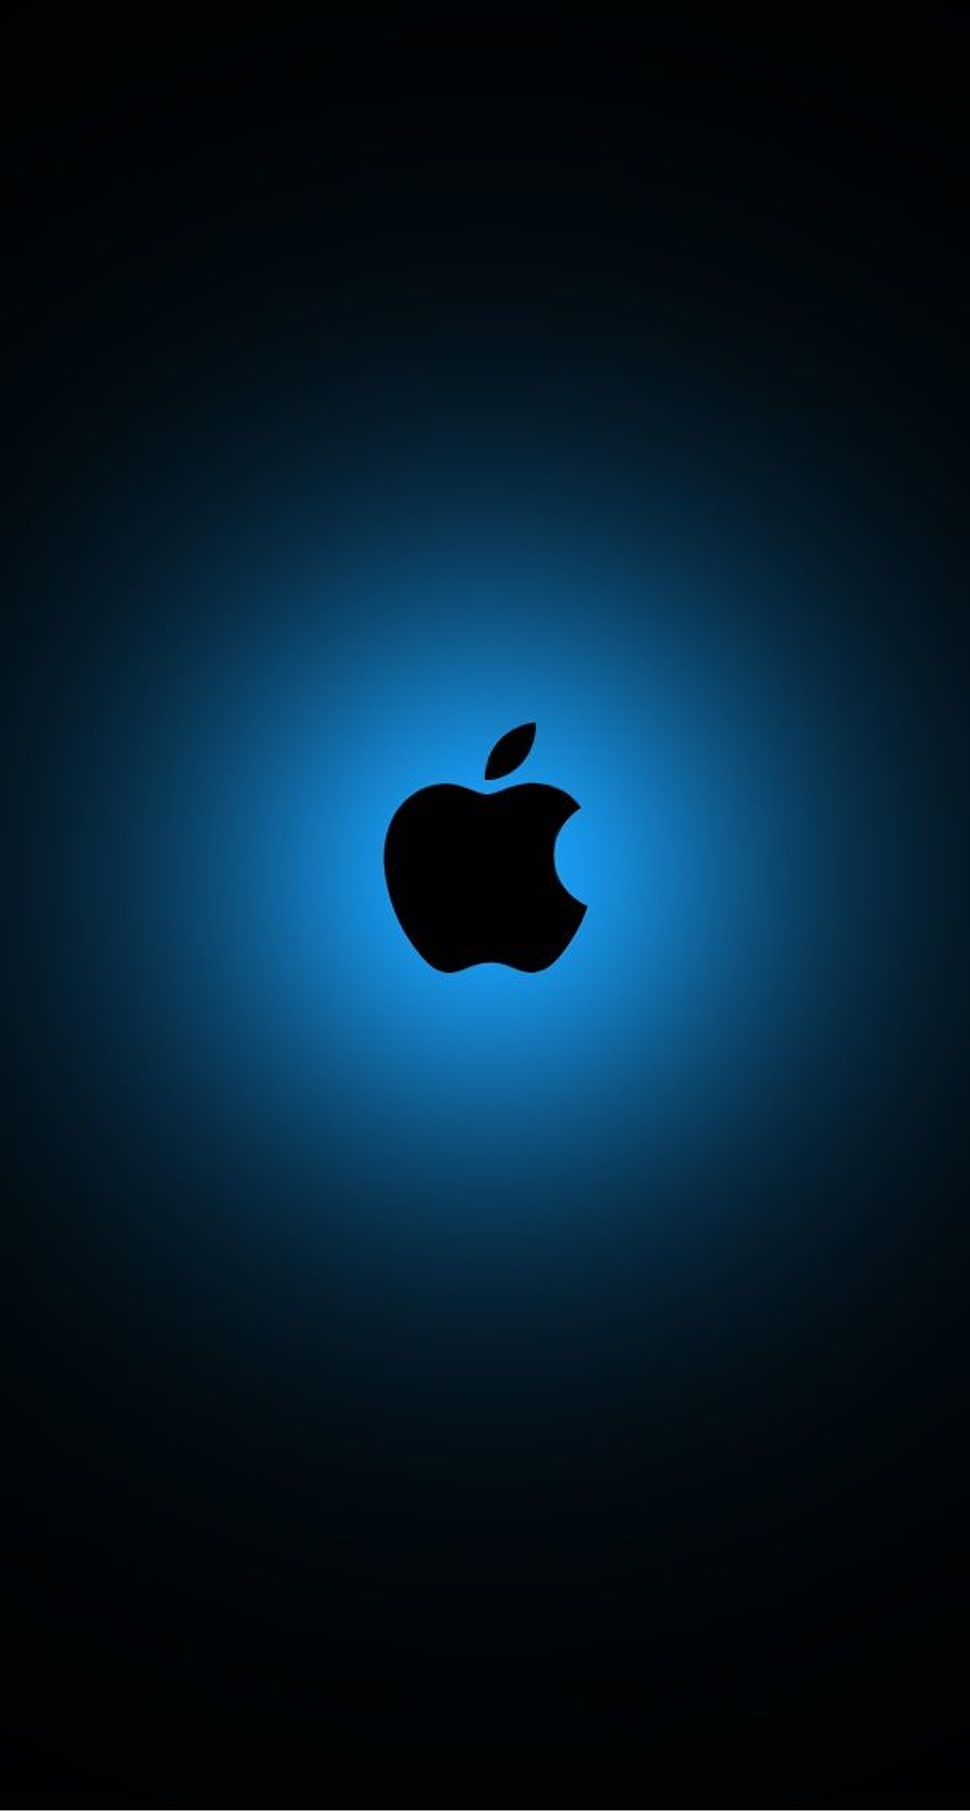 Apple symbol with cool background  Apple logo wallpaper Apple logo Apple  wallpaper